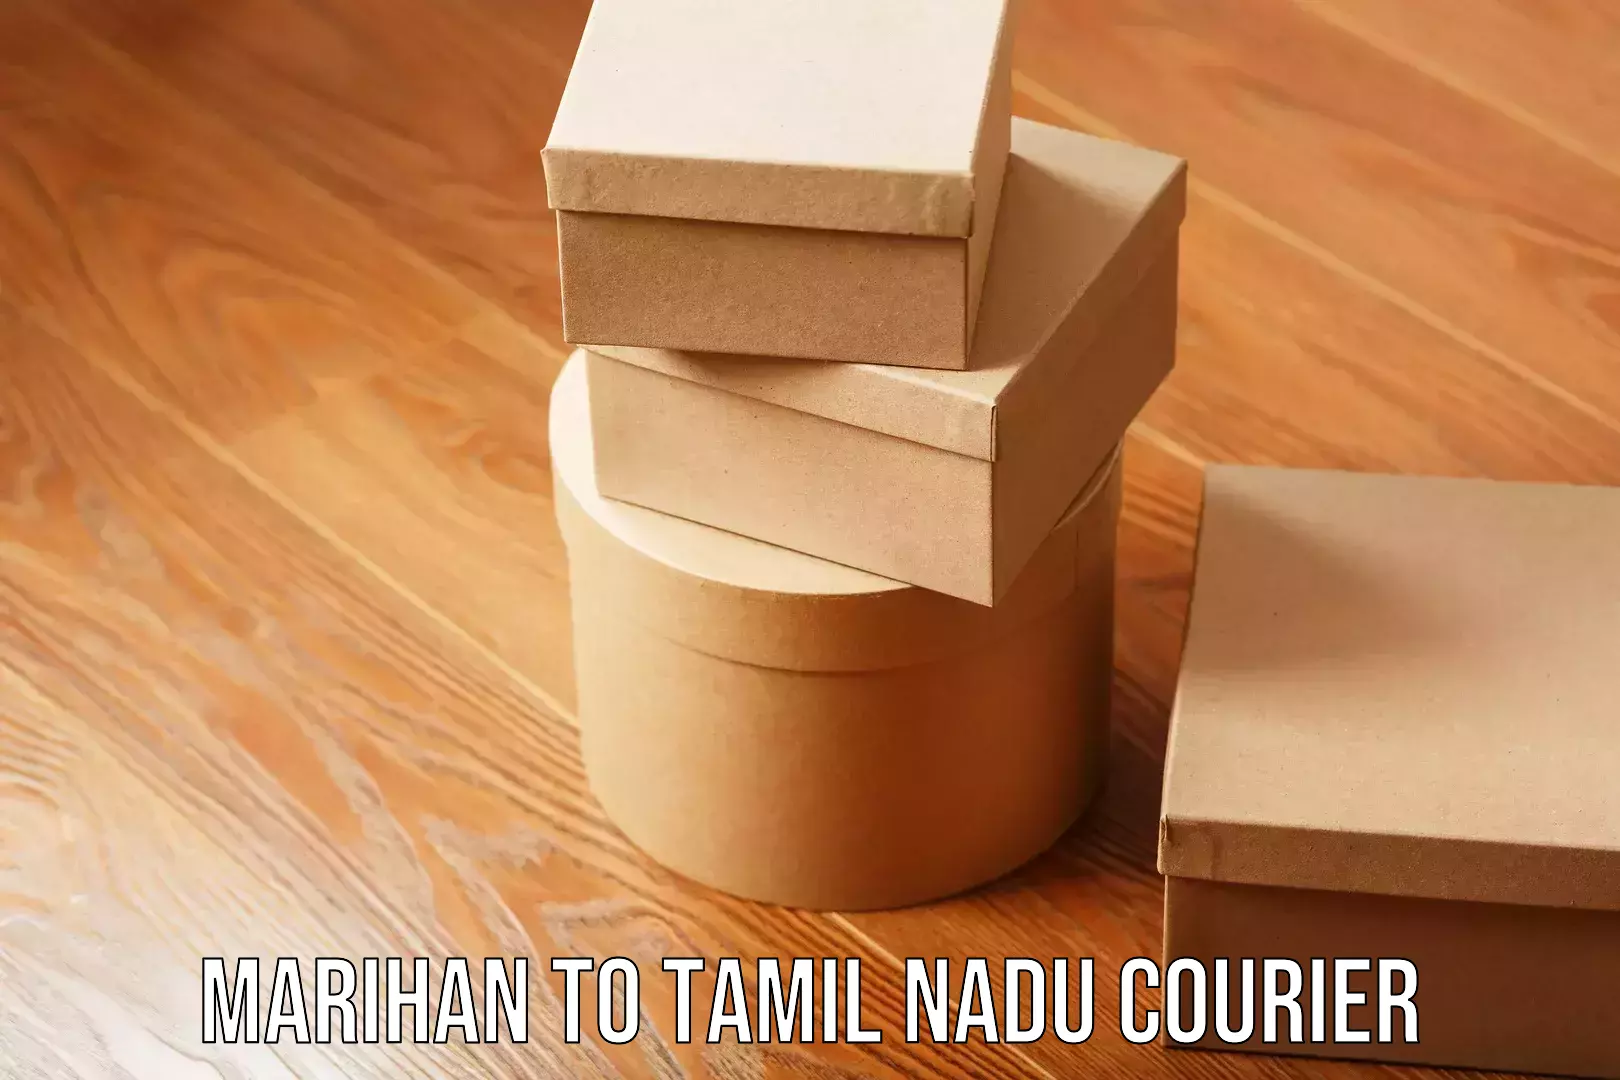 Household moving experts Marihan to Tamil Nadu